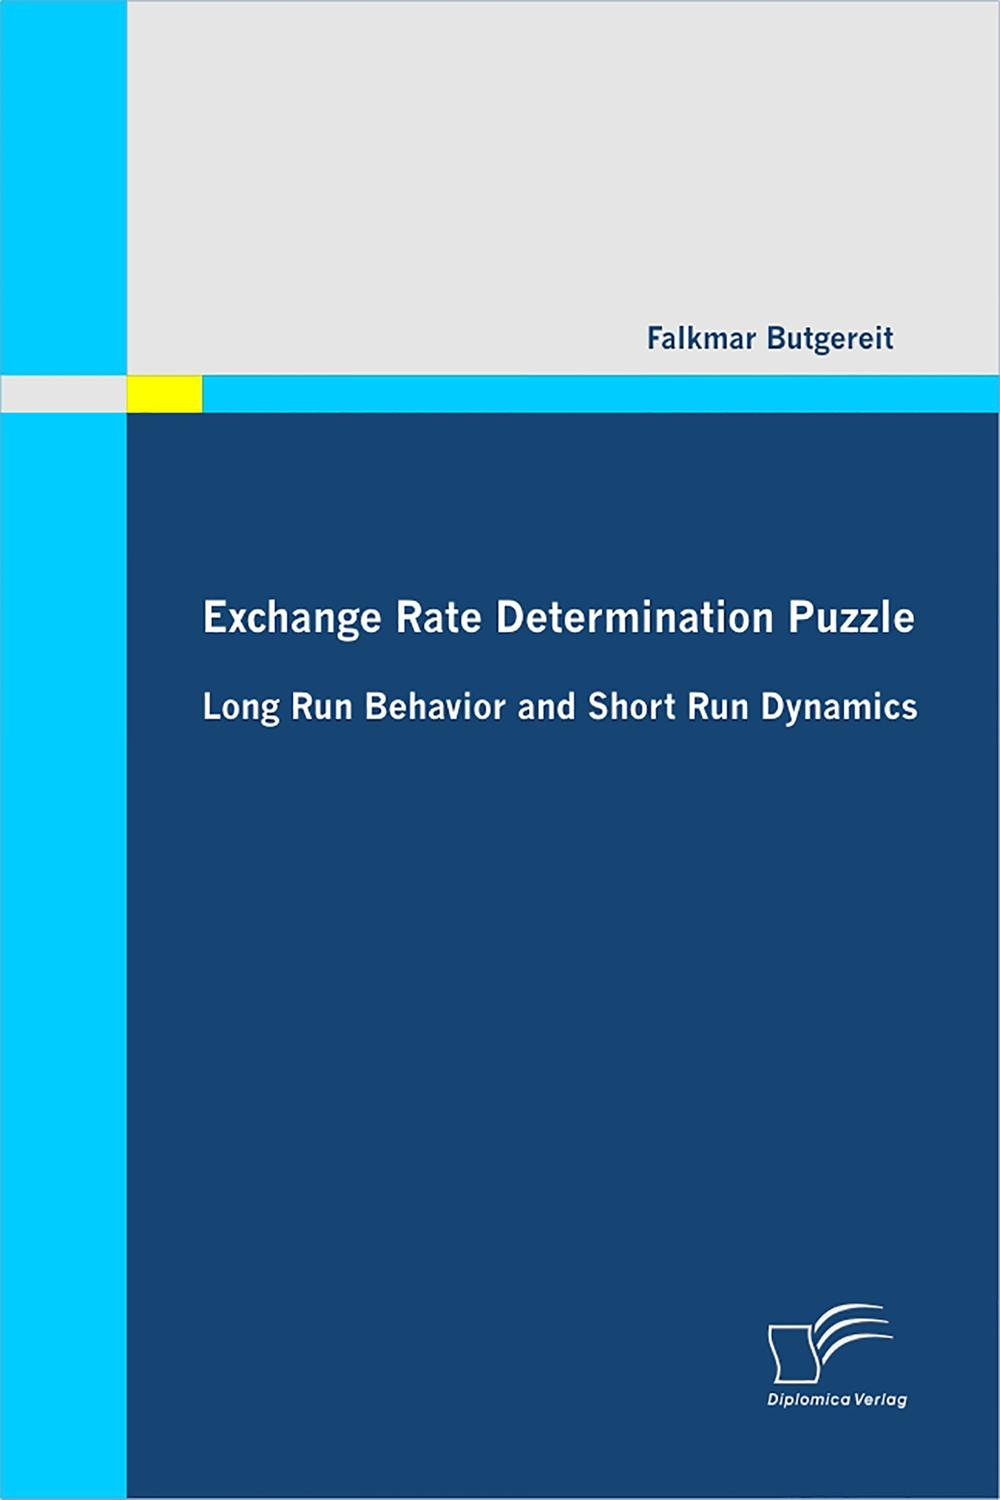 Exchange Rate Determination Puzzle: Long Run Behavior and Short Run Dynamics - Falkmar Butgereit,,